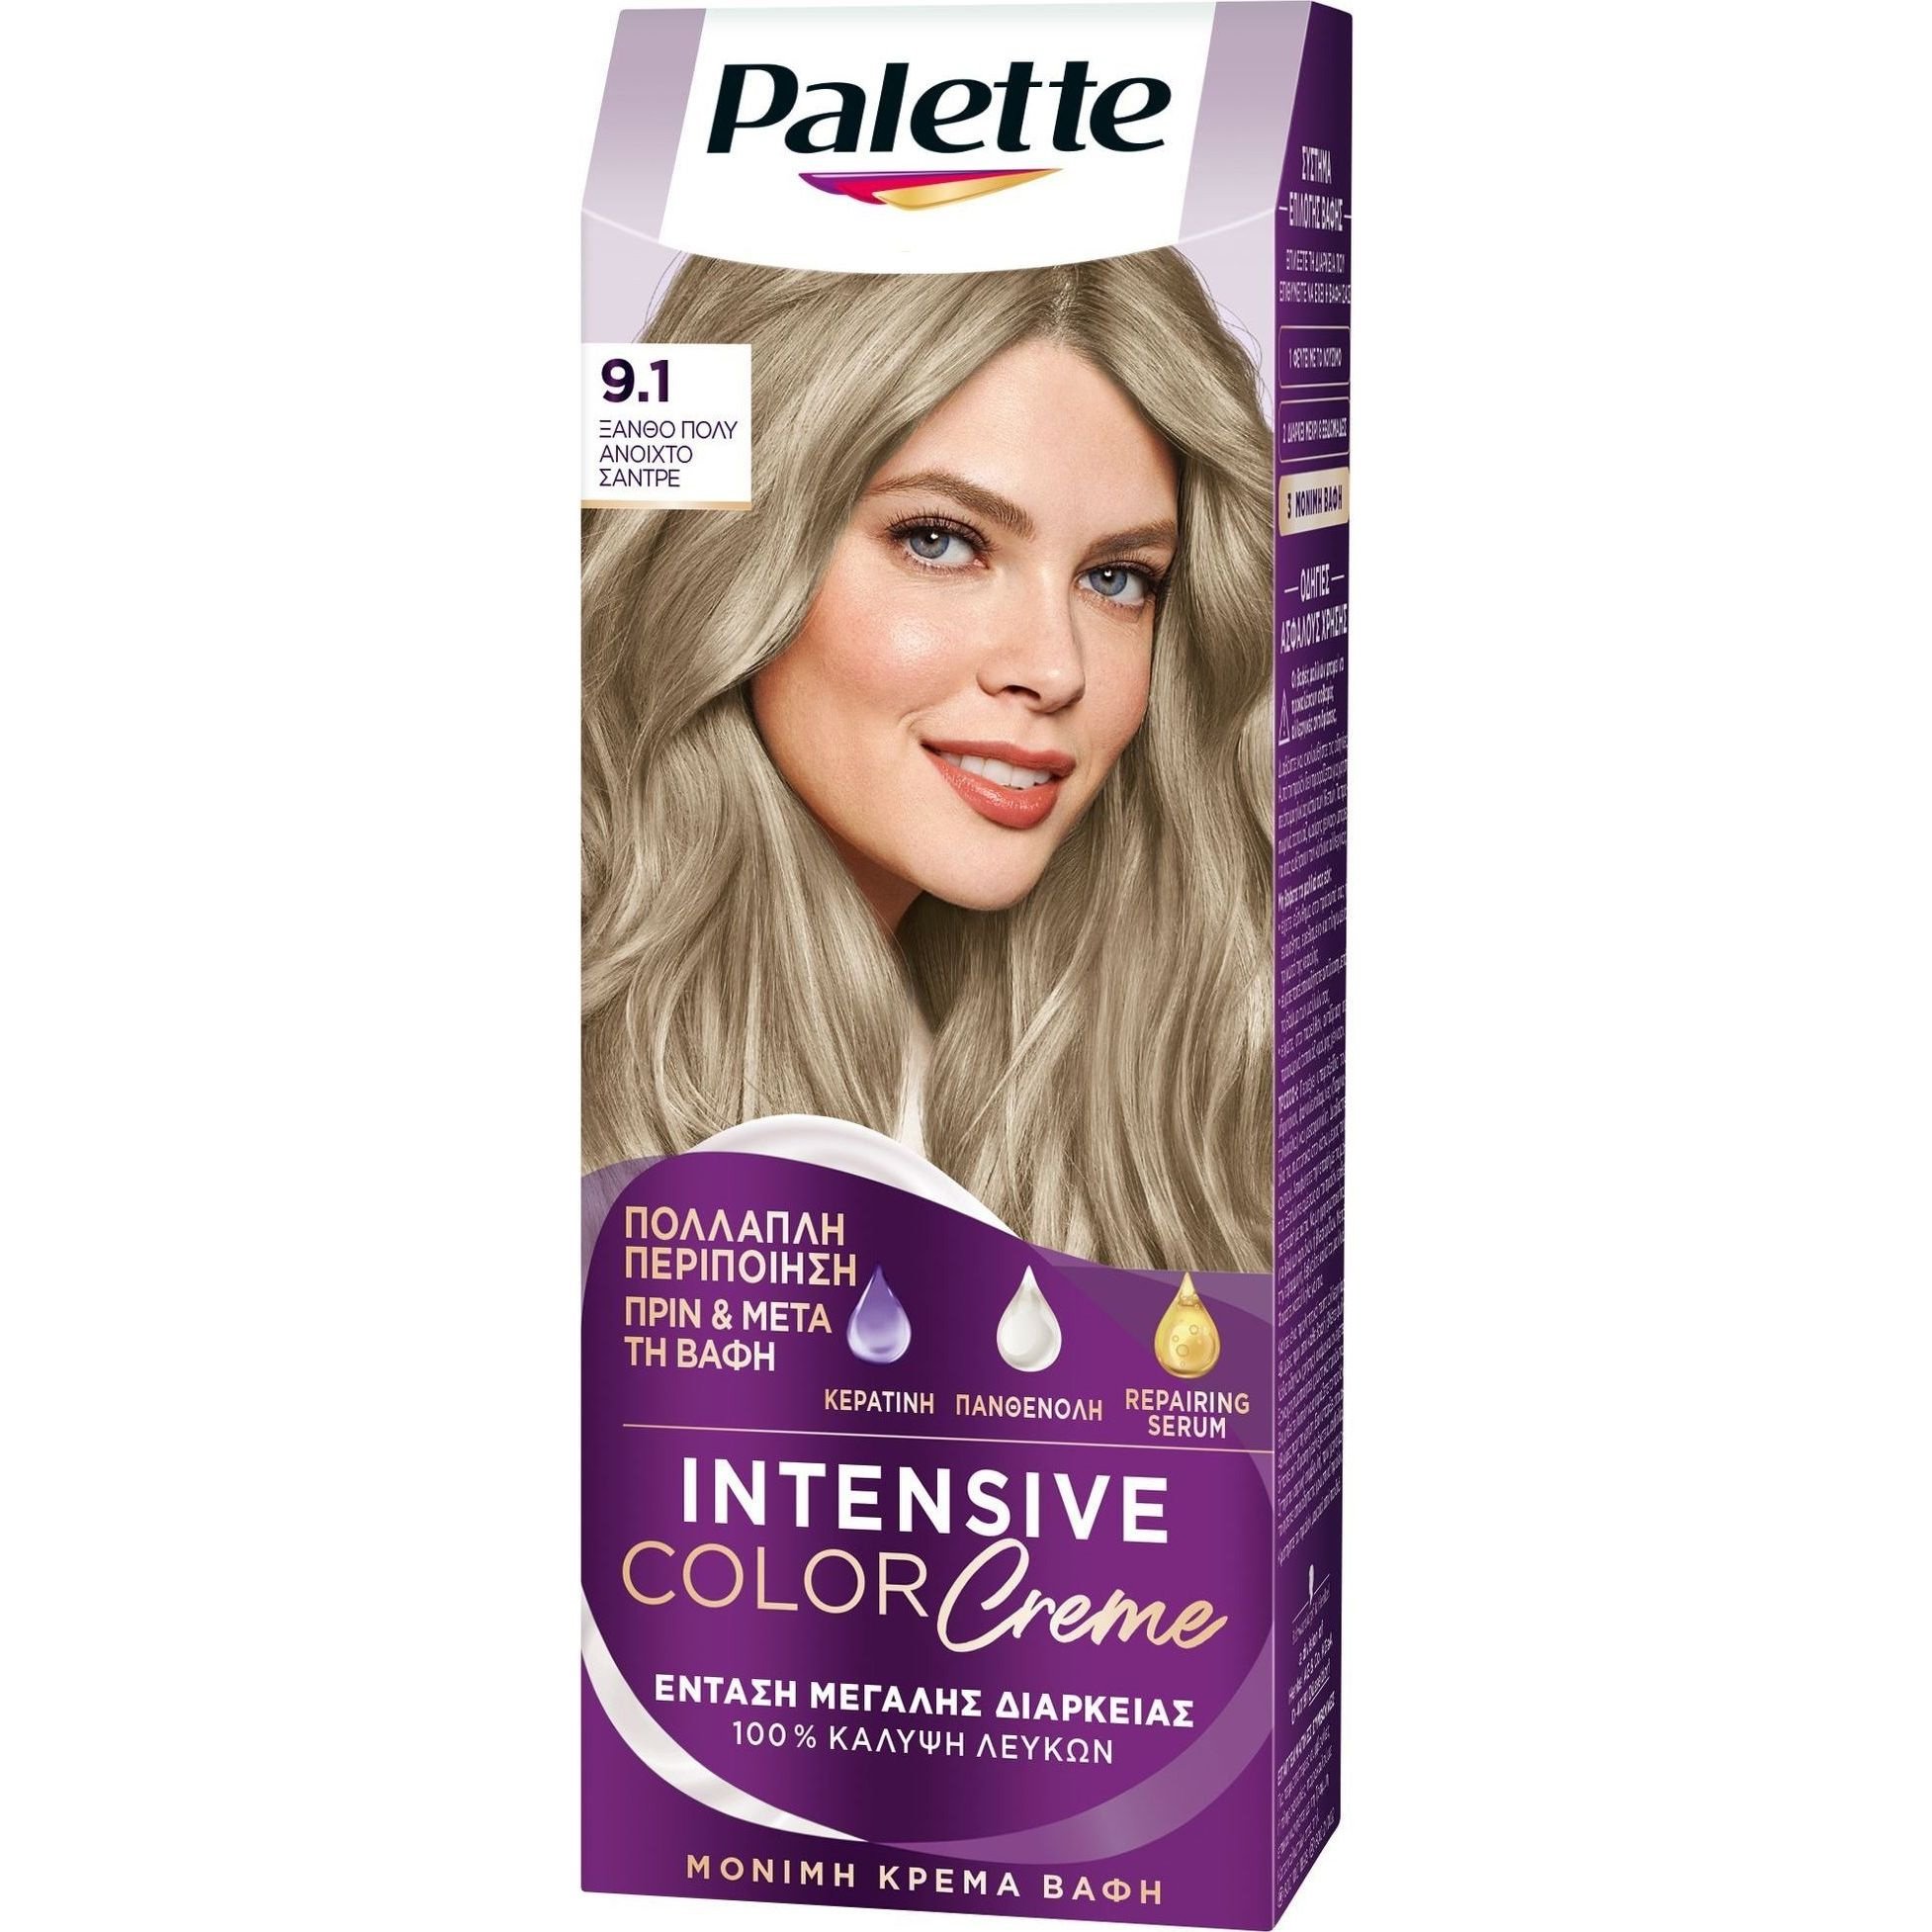 Schwarzkopf Palette Intensive Hair Color Creme Kit Μόνιμη Κρέμα Βαφή Μαλλιών για Έντονο Χρώμα Μεγάλης Διάρκειας & Περιποίηση 1 Τεμάχιο – 9.1 Ξανθό Πολύ Ανοιχτό Σαντρέ